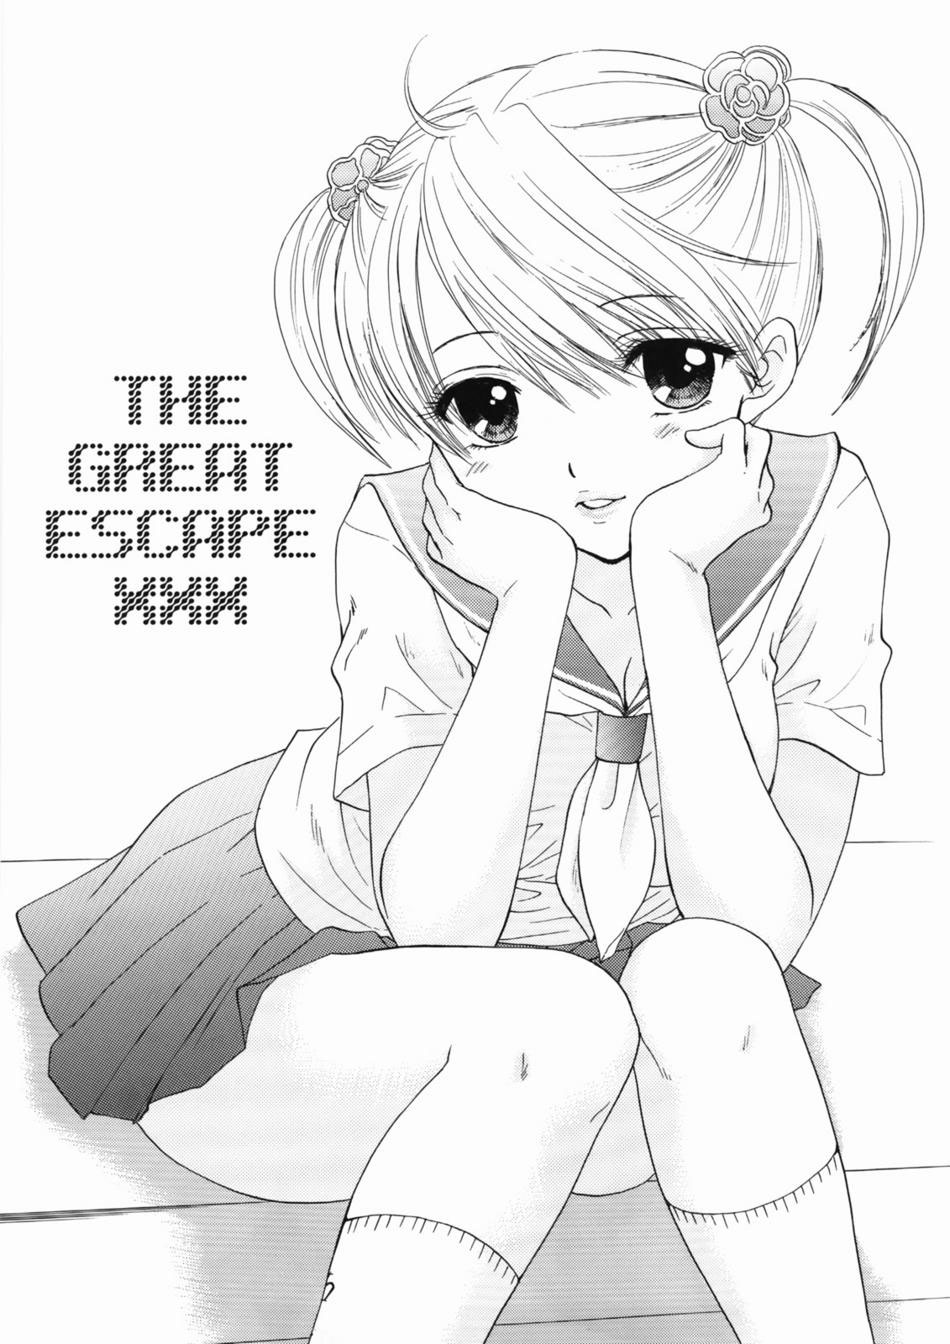 (C72) [BEAT-POP (尾崎未来)] The Great Escape XXX [英訳]